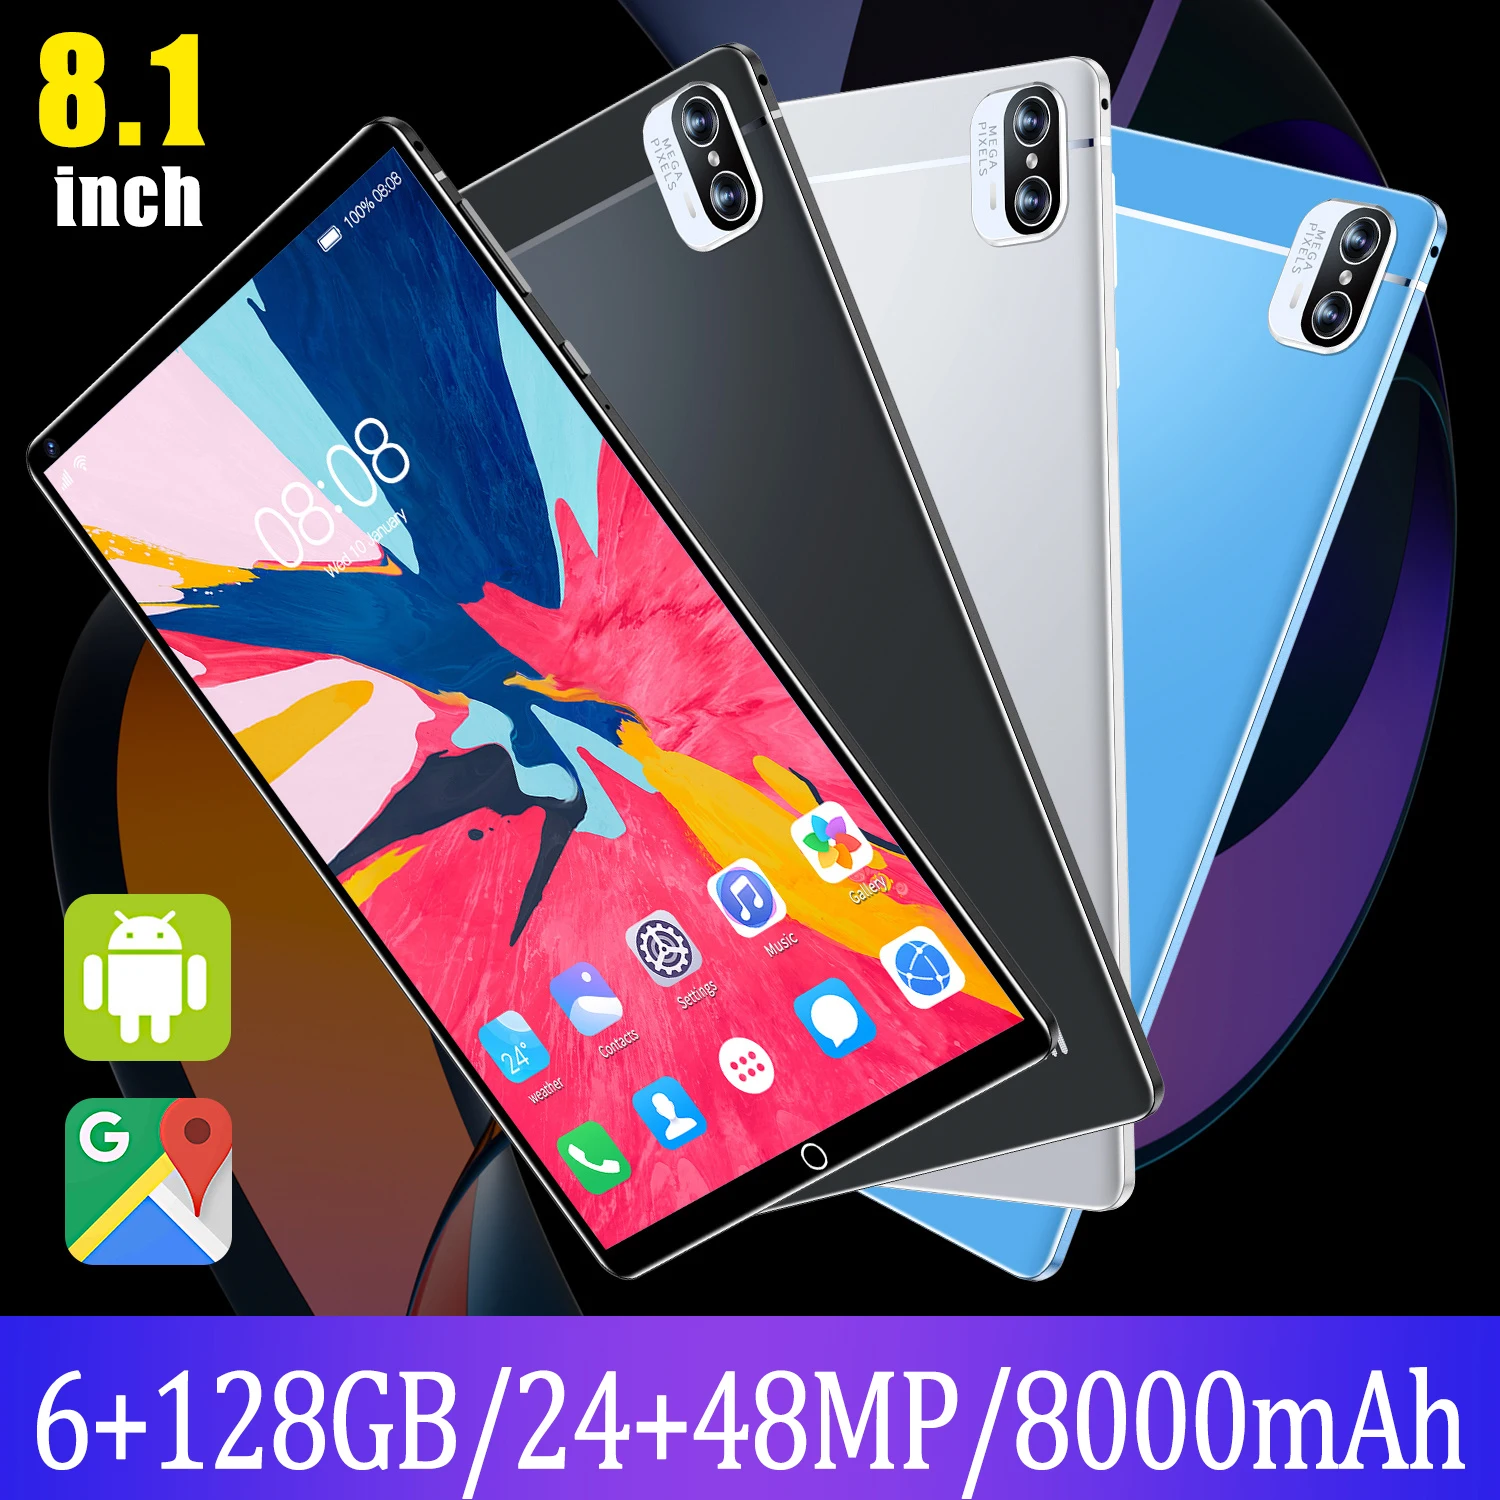 Дешевый ноутбук X5 Tablet Android 12 10-ядерный 8 1 дюйма 128 ГБ ROM Google Play SIM 4G/телефон 8000 мАч GPS